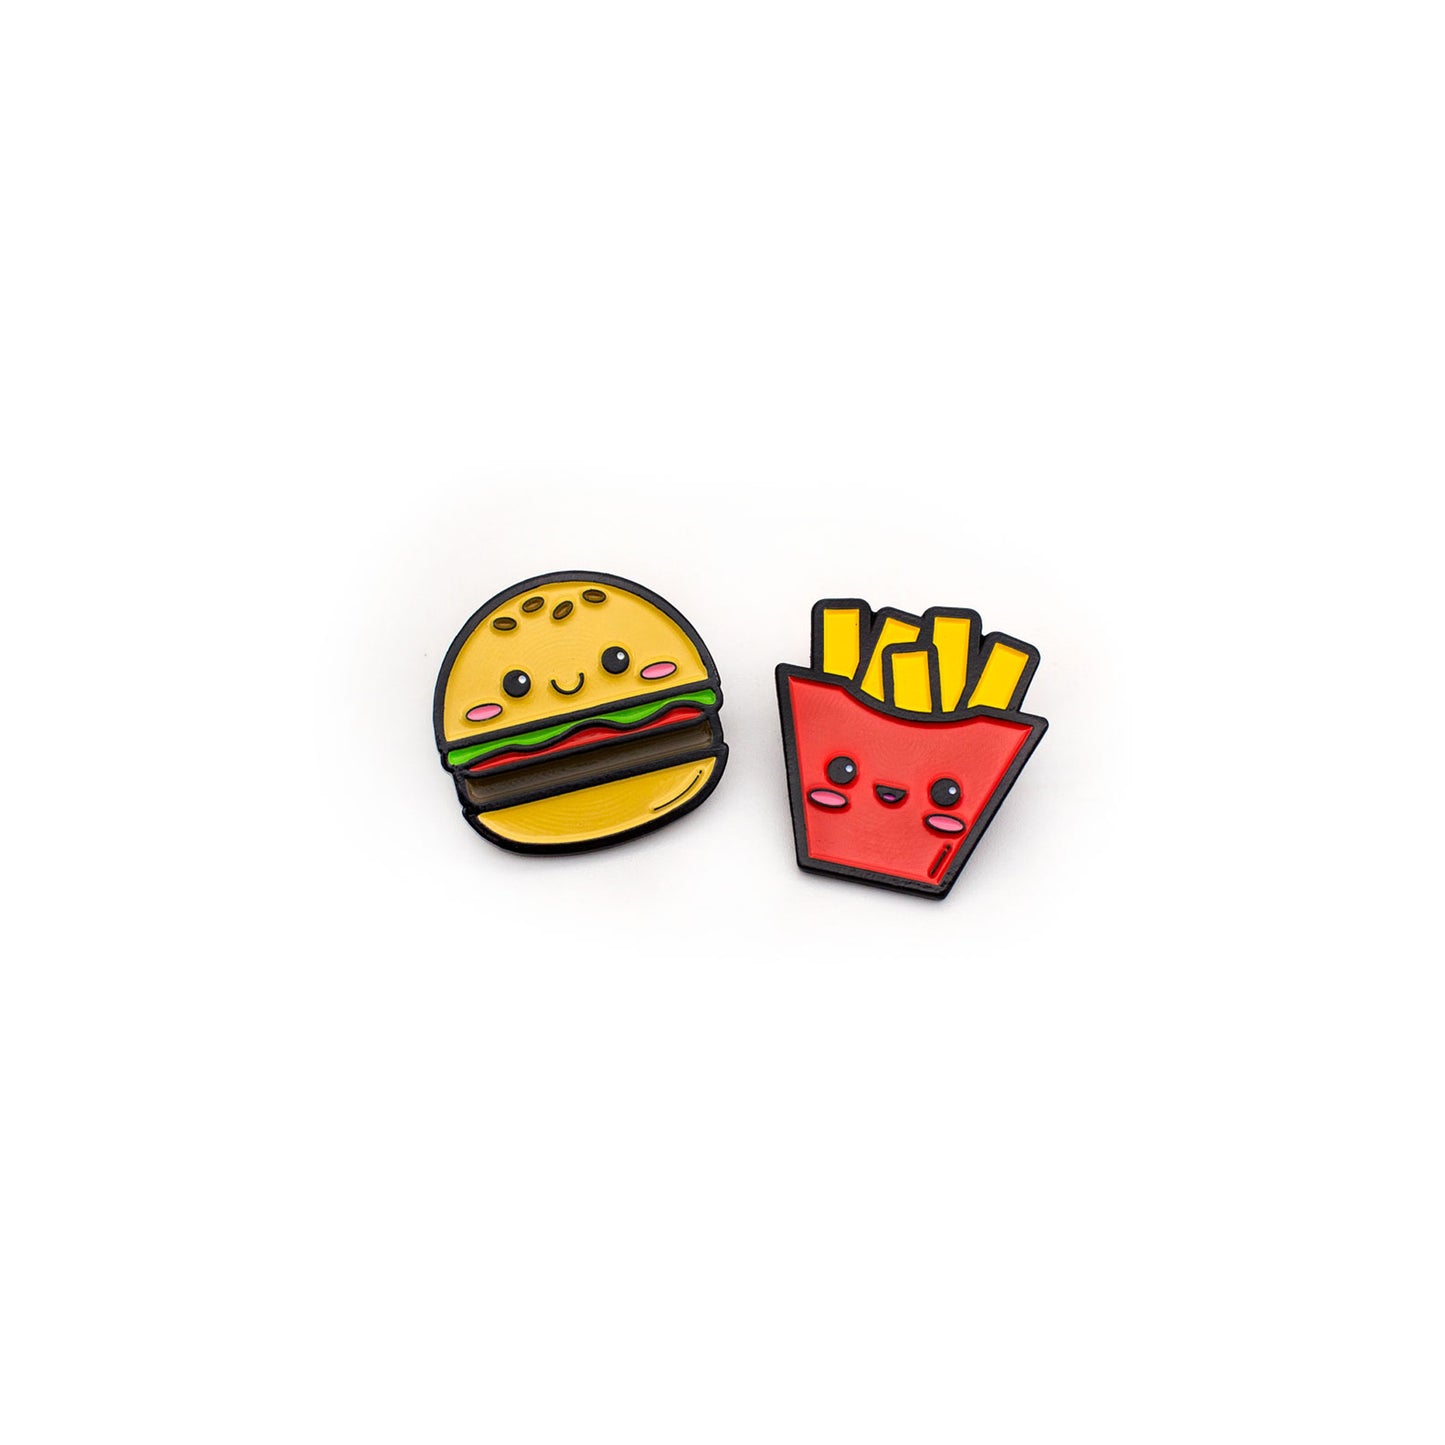 Burger and Fries enamel pin set on white background